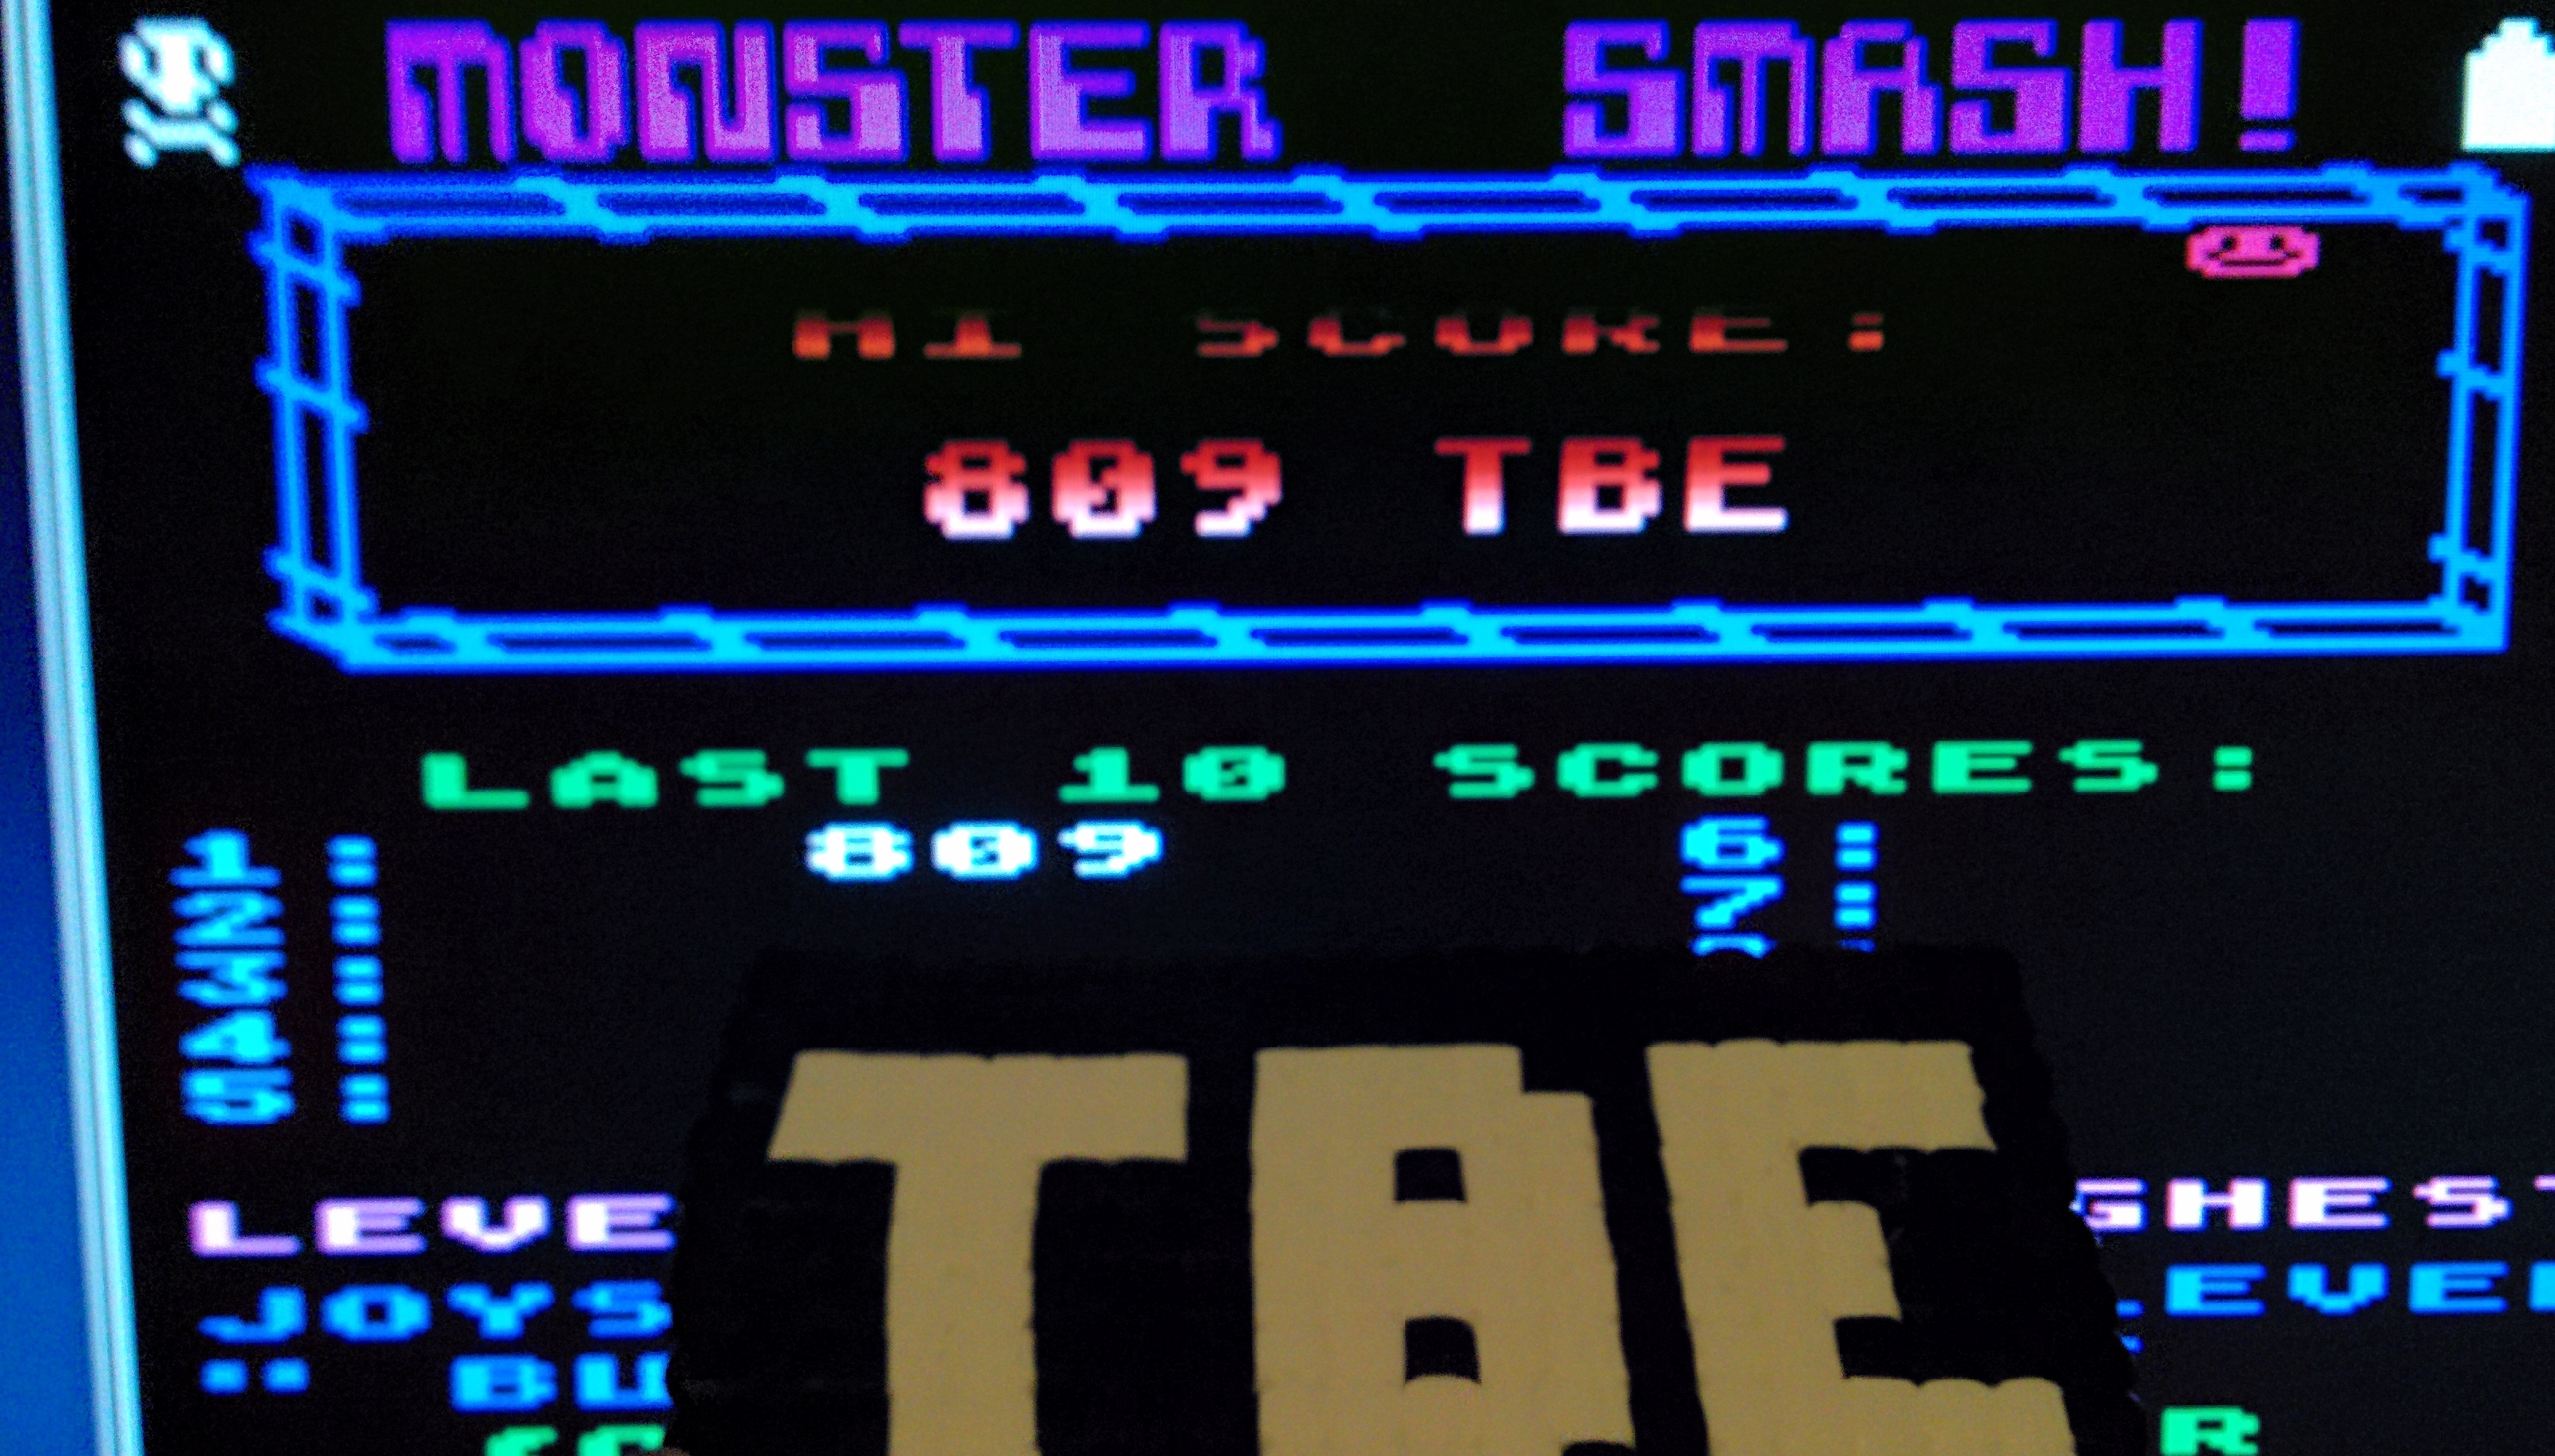 Sixx: Monster Smash! (Atari 400/800/XL/XE Emulated) 809 points on 2014-10-25 13:46:02